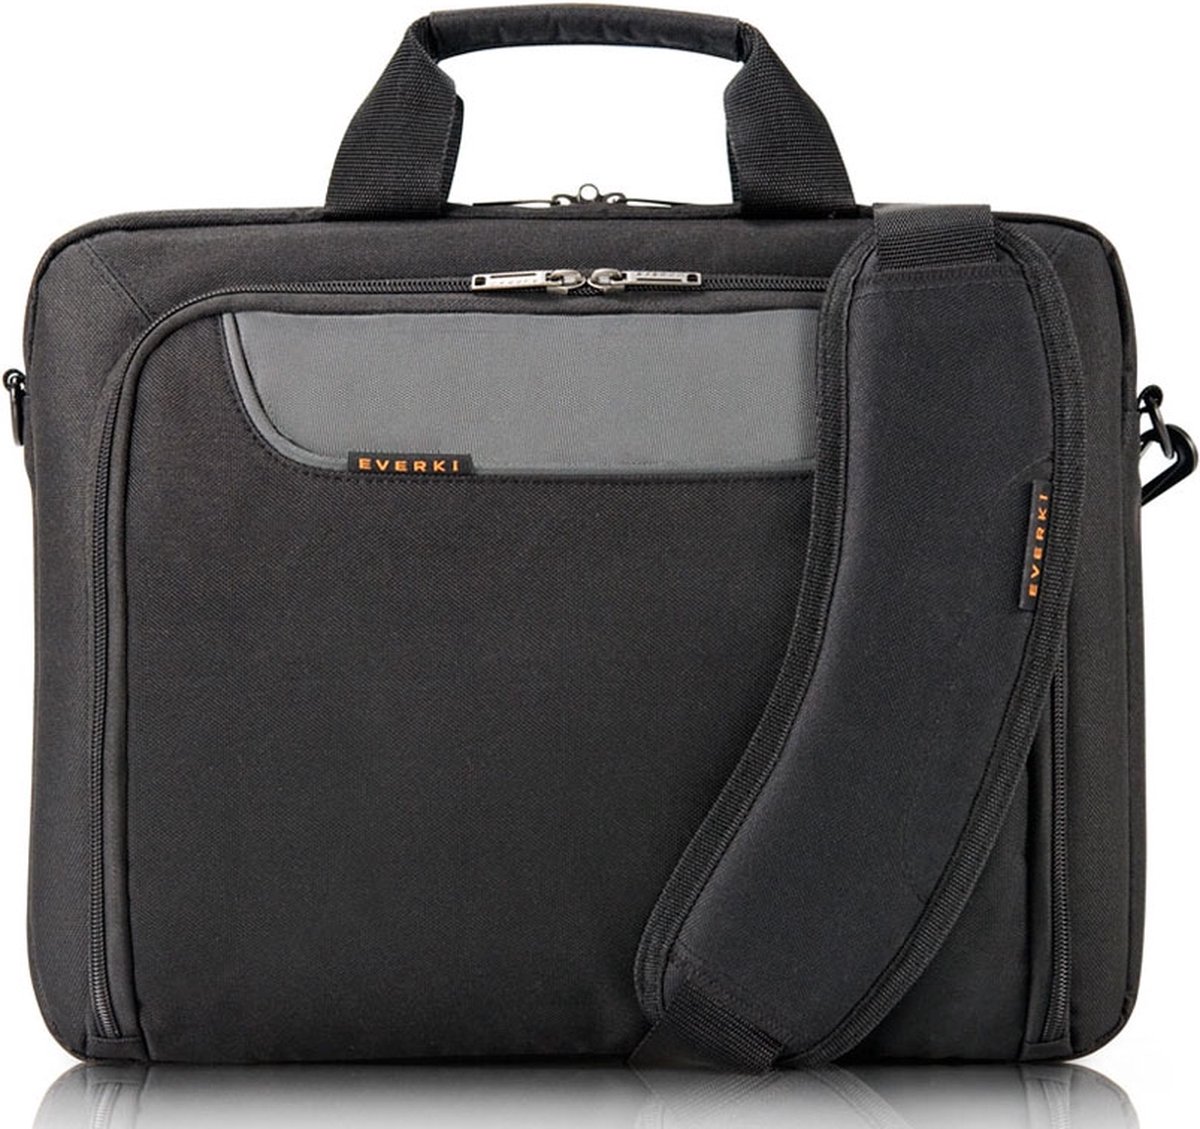 Everki Advance Laptop Bag Briefcase 14.1 Black